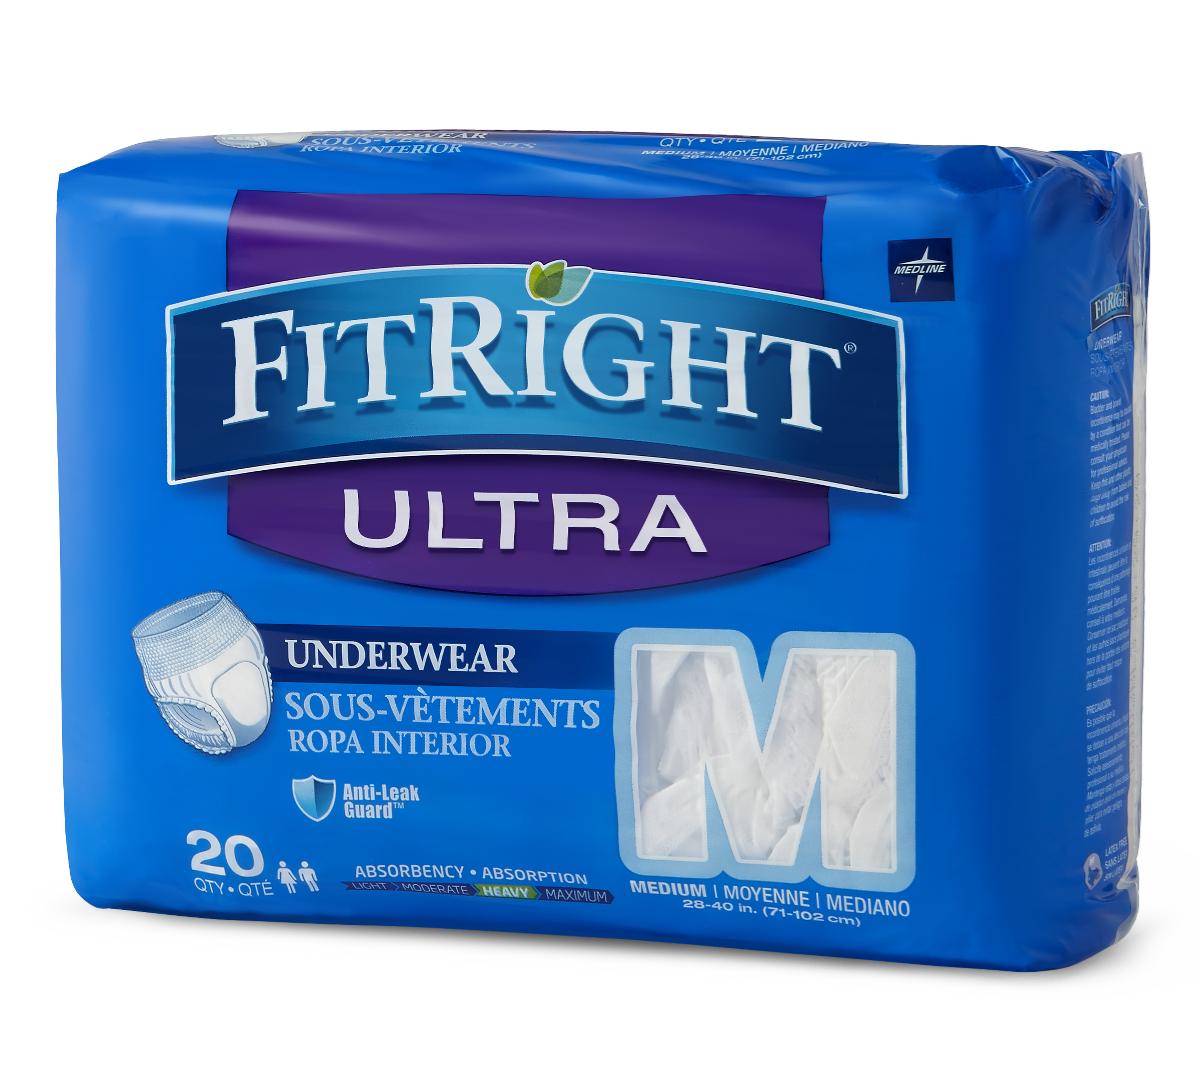 FitRight Ultra Protective Underwear Medium